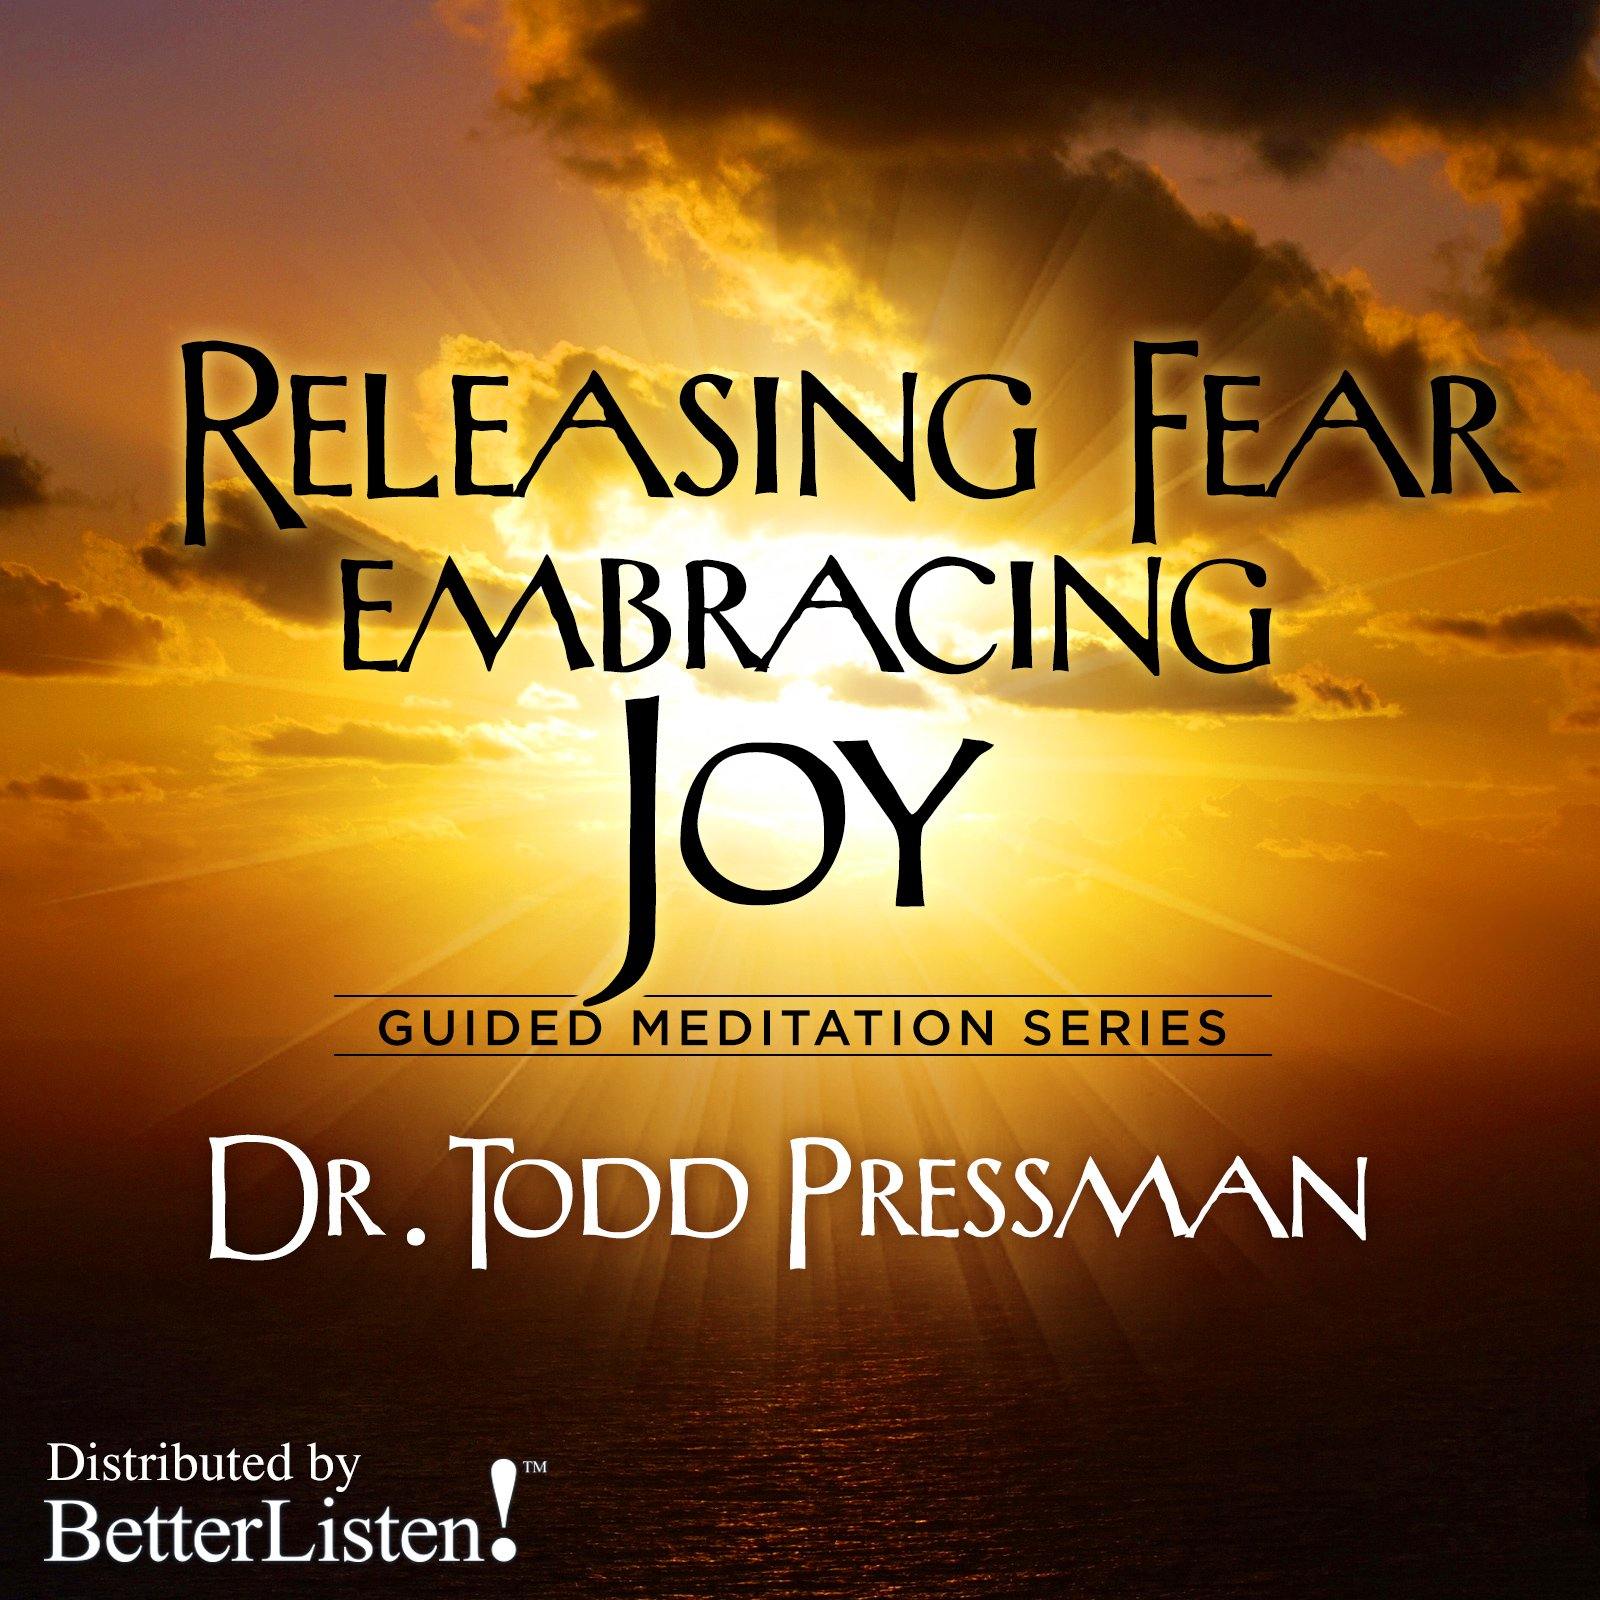 Releasing Fear Embracing Joy by Dr. Todd Pressman Audio Program BetterListen! - BetterListen!